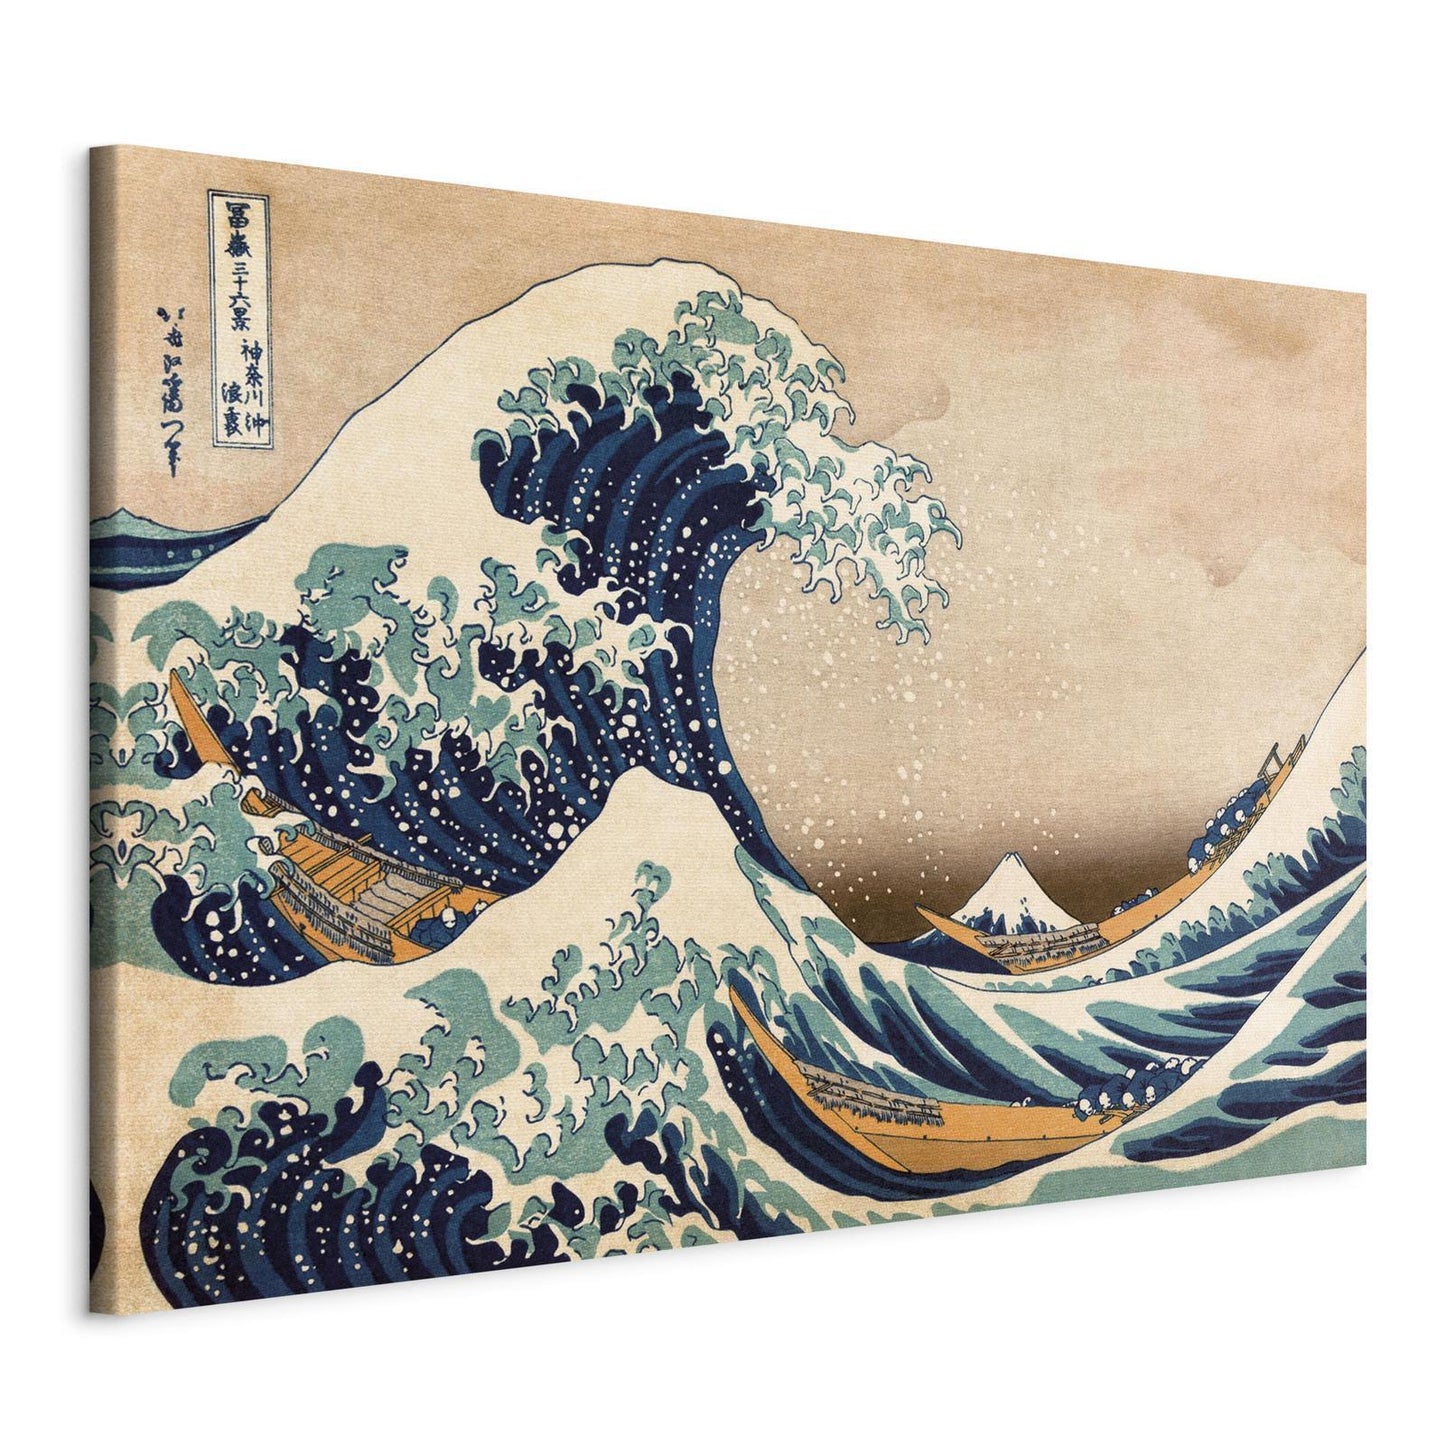 Canvas Print - The Great Wave off Kanagawa (Reproduction)